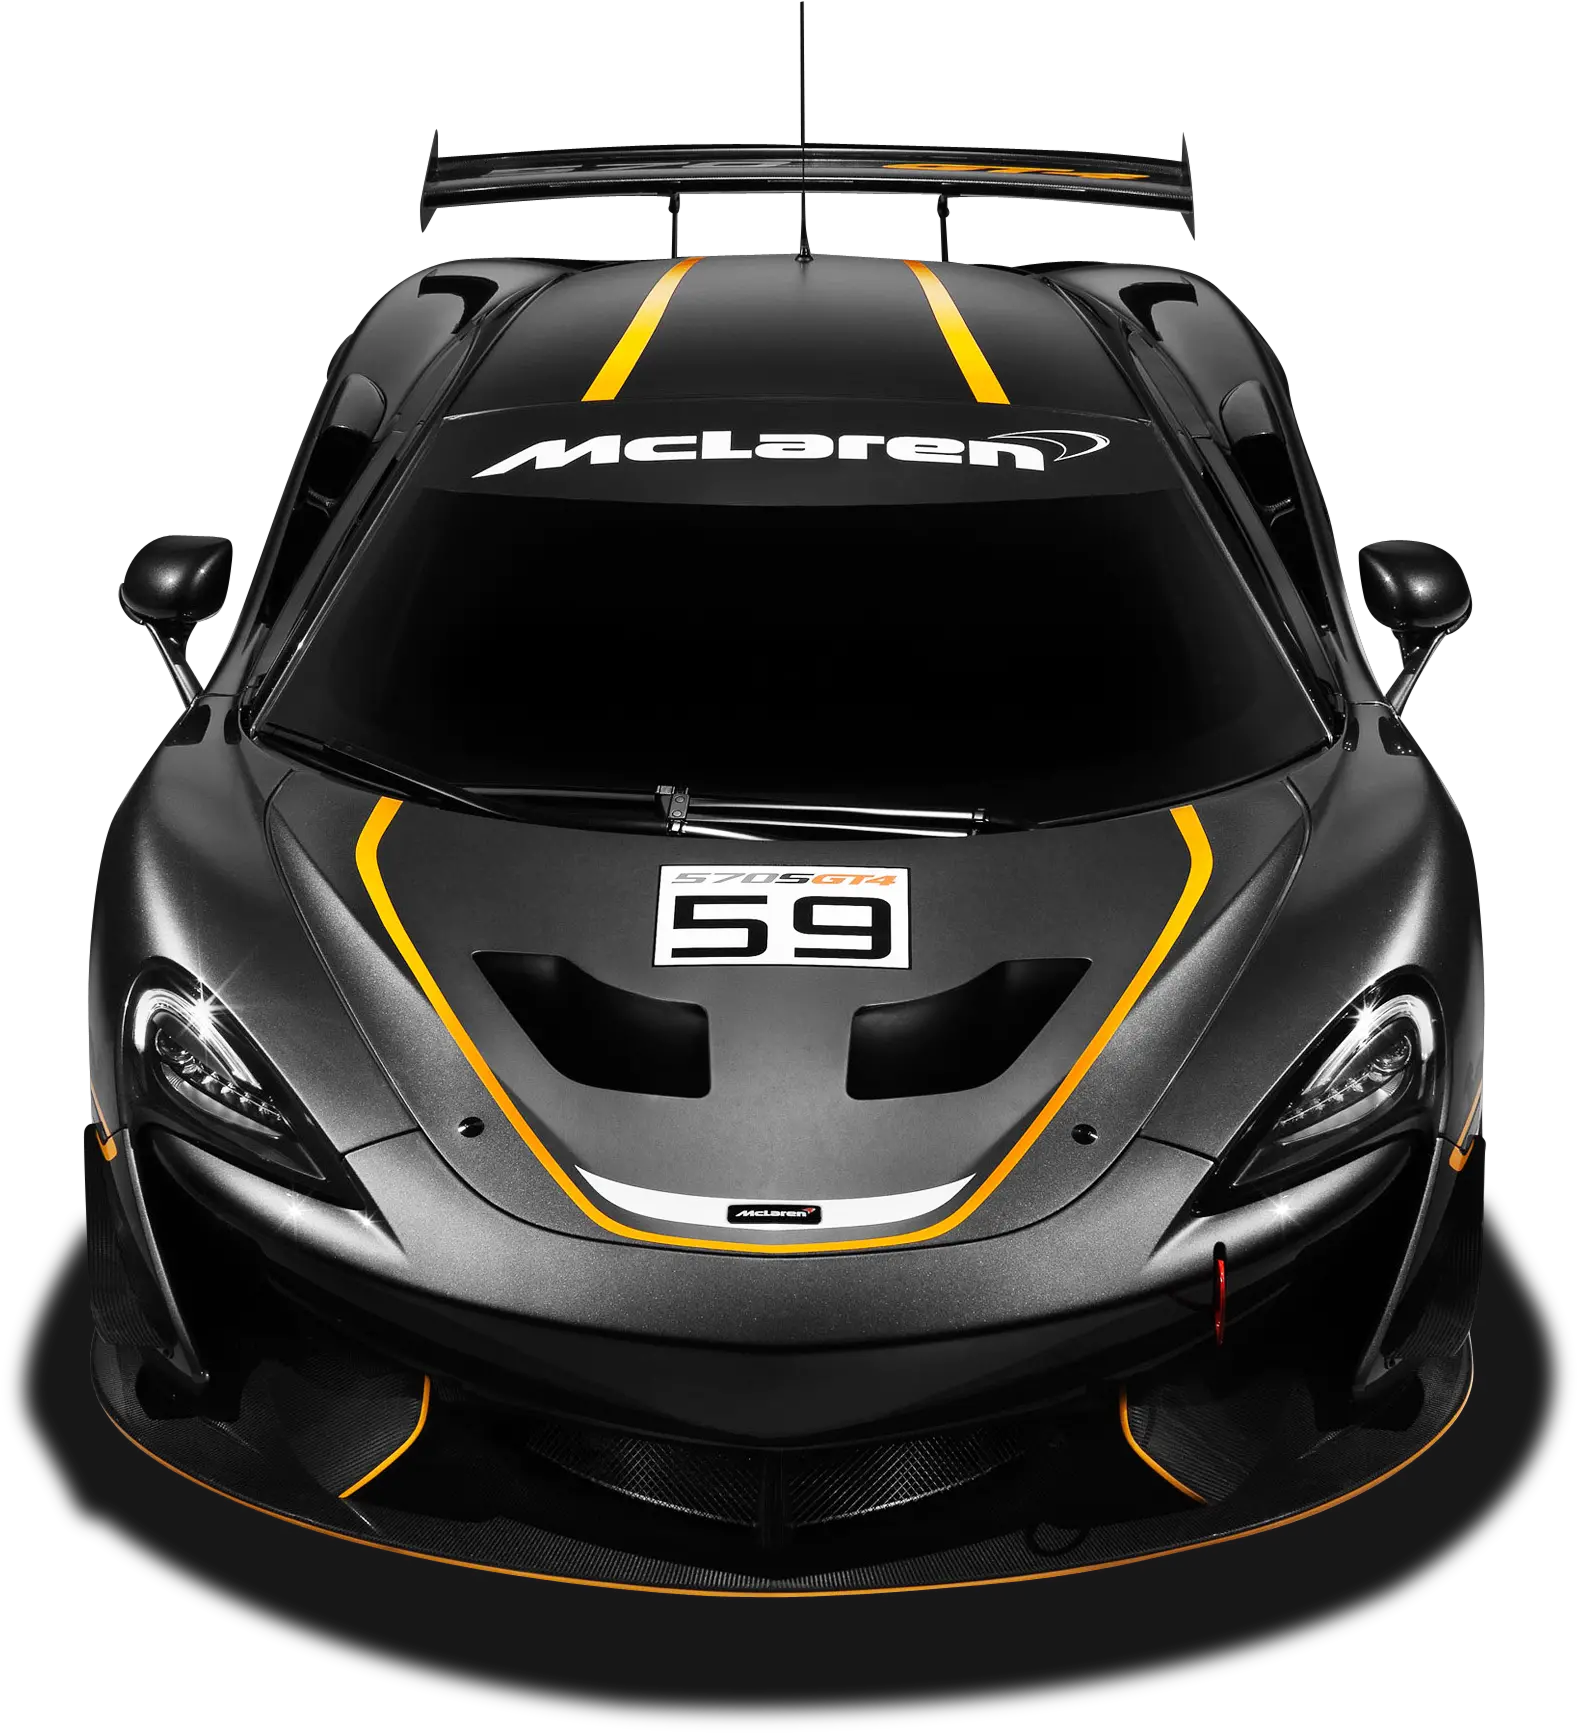 Download Black Mclaren 570s Gt4 Race Car Png Image For Free Mclaren 570s Race Car Race Png